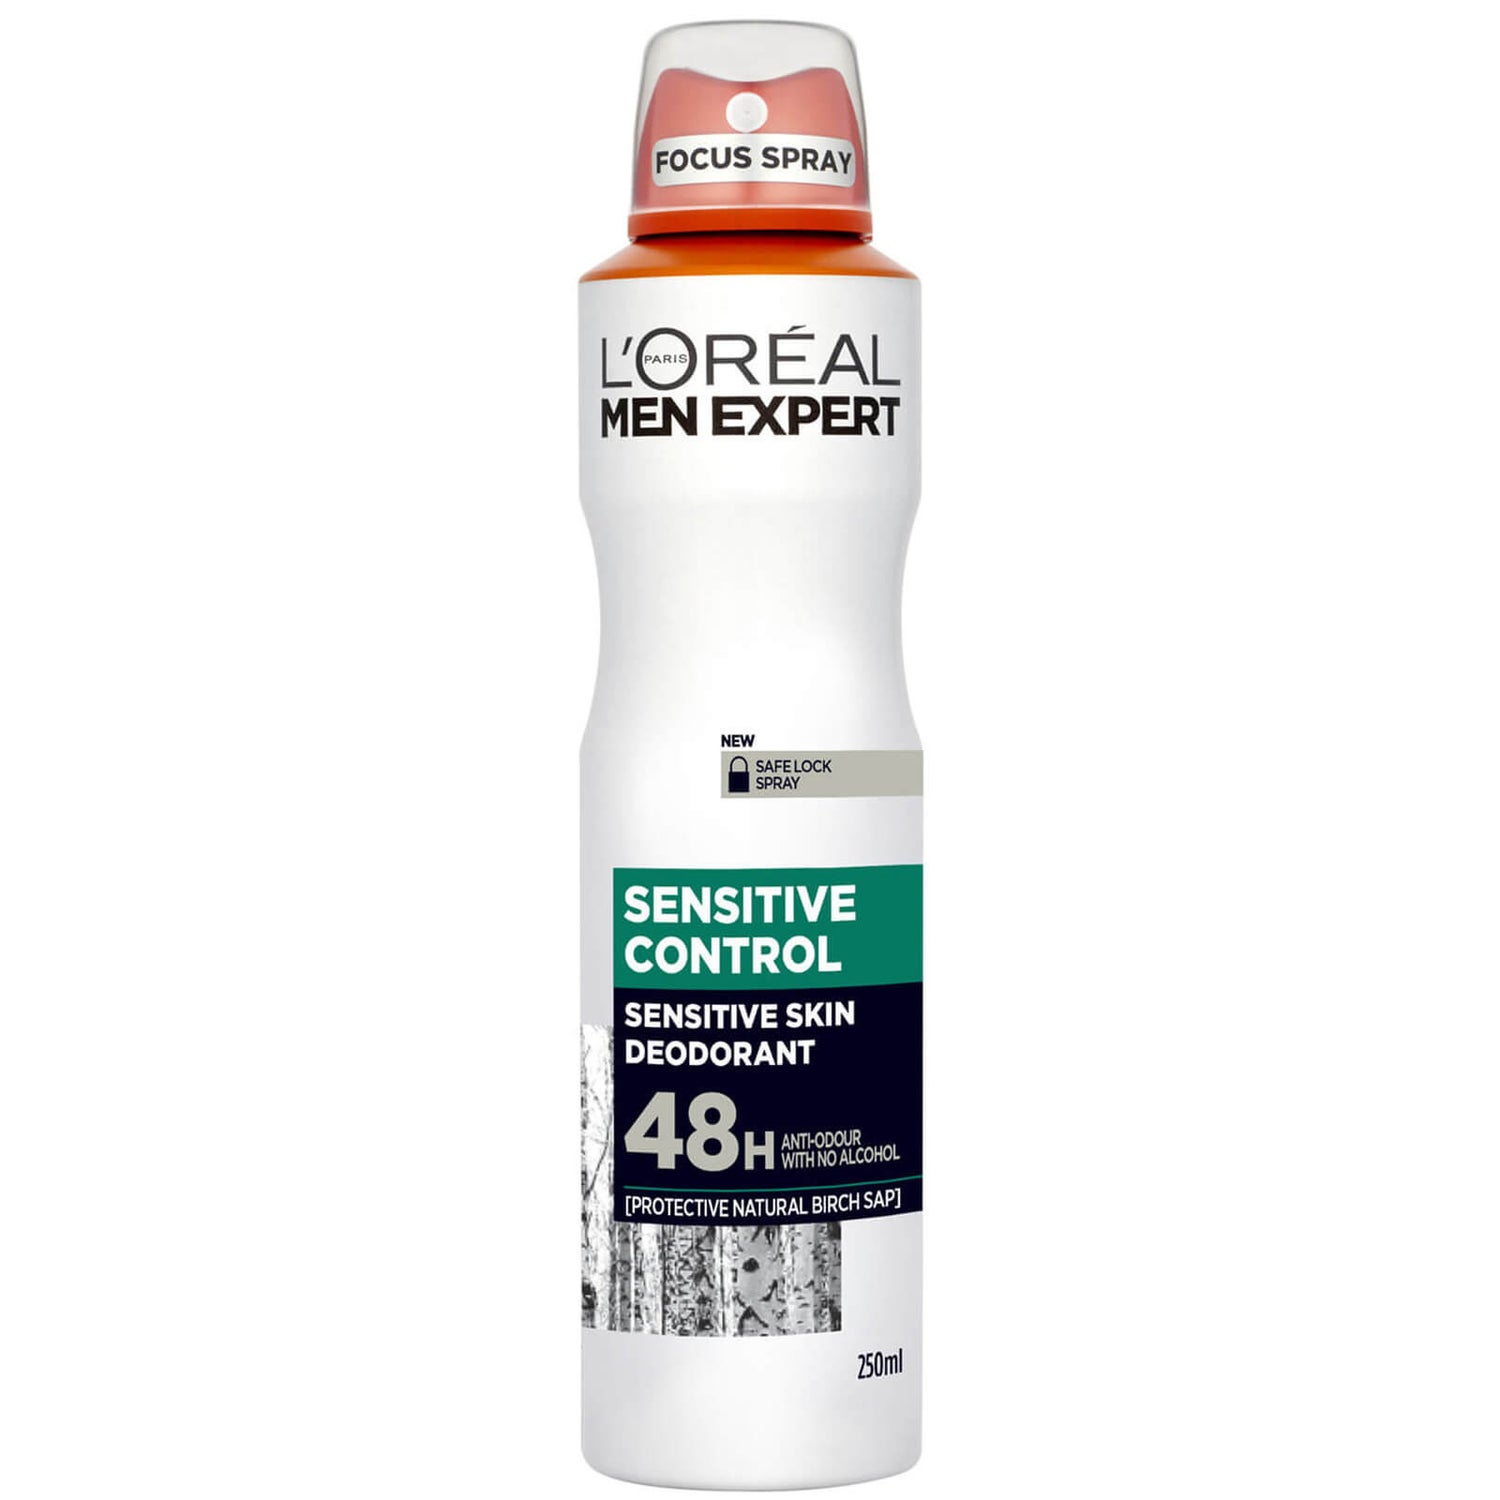 L'Oreal Men Expert Sensitive Control 48H Anti-Perspirant Deodorant 250ml